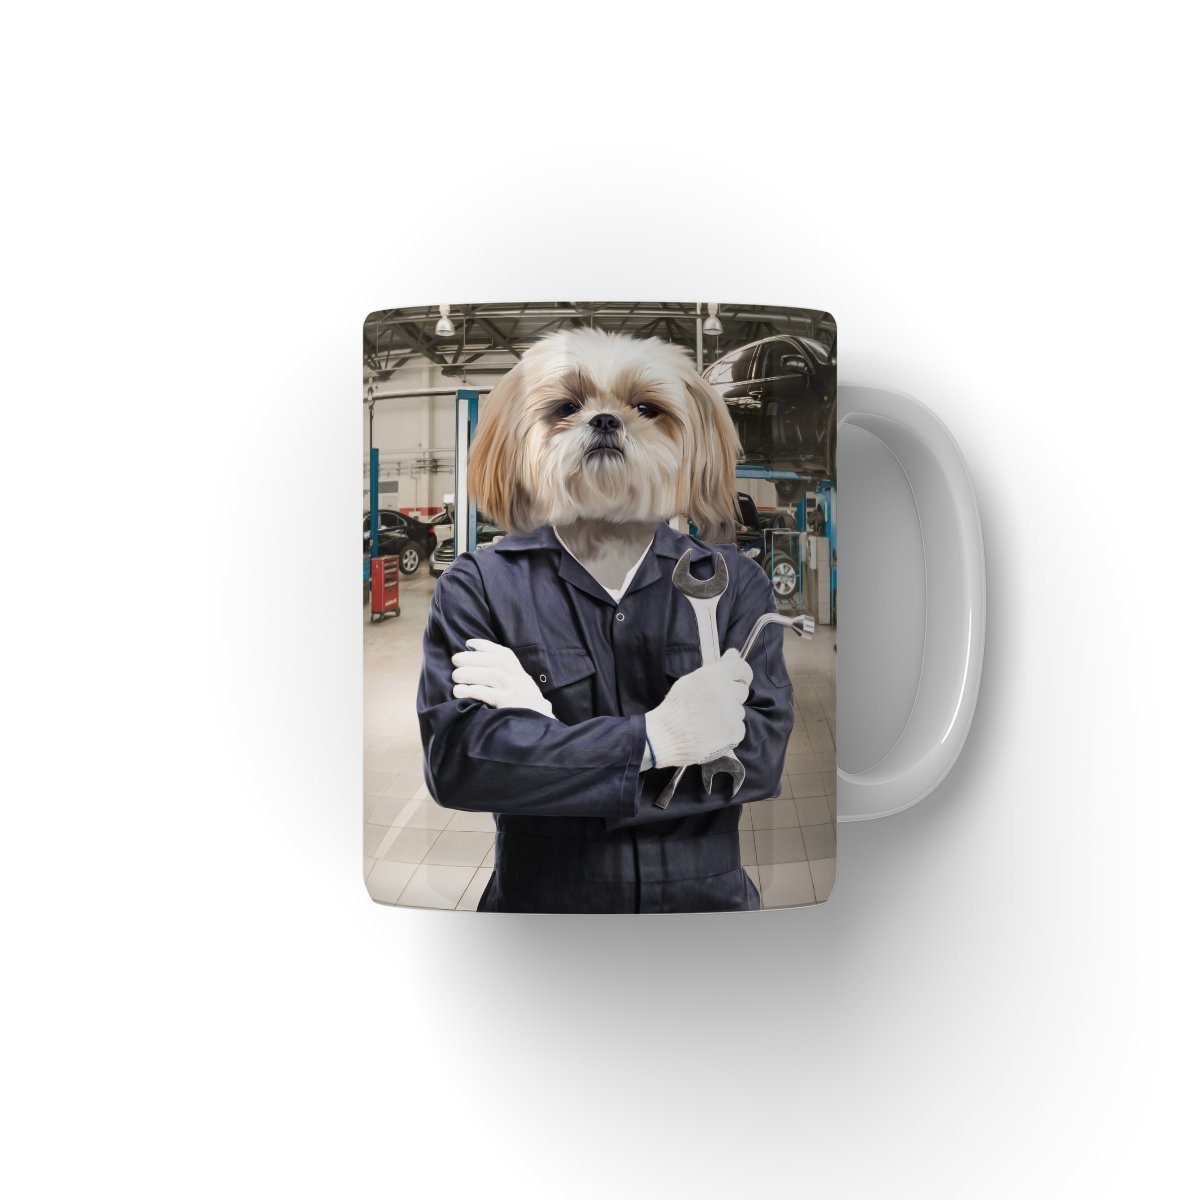 The Mechanic: Custom Pet Mug - Paw & Glory - #pet portraits# - #dog portraits# - #pet portraits uk#paw and glory, custom pet portrait Mug,custom order mugs, dog personalised mug, personalised animal mugs, personalised pet mugs, dog picture on coffee mug